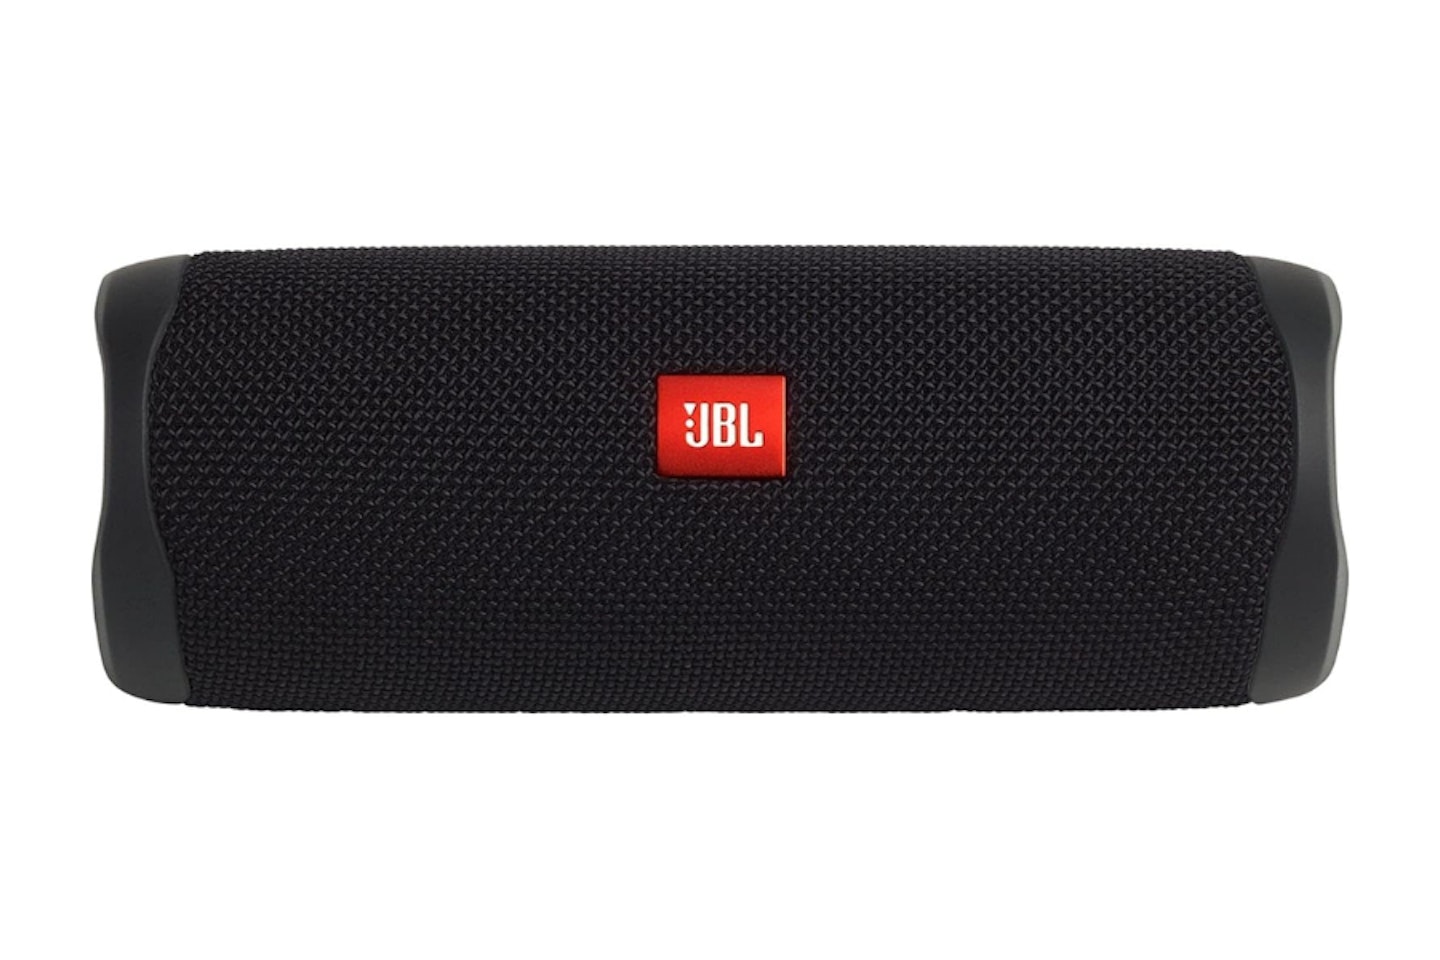  JBL FLIP 5 Waterproof Portable Bluetooth Speaker